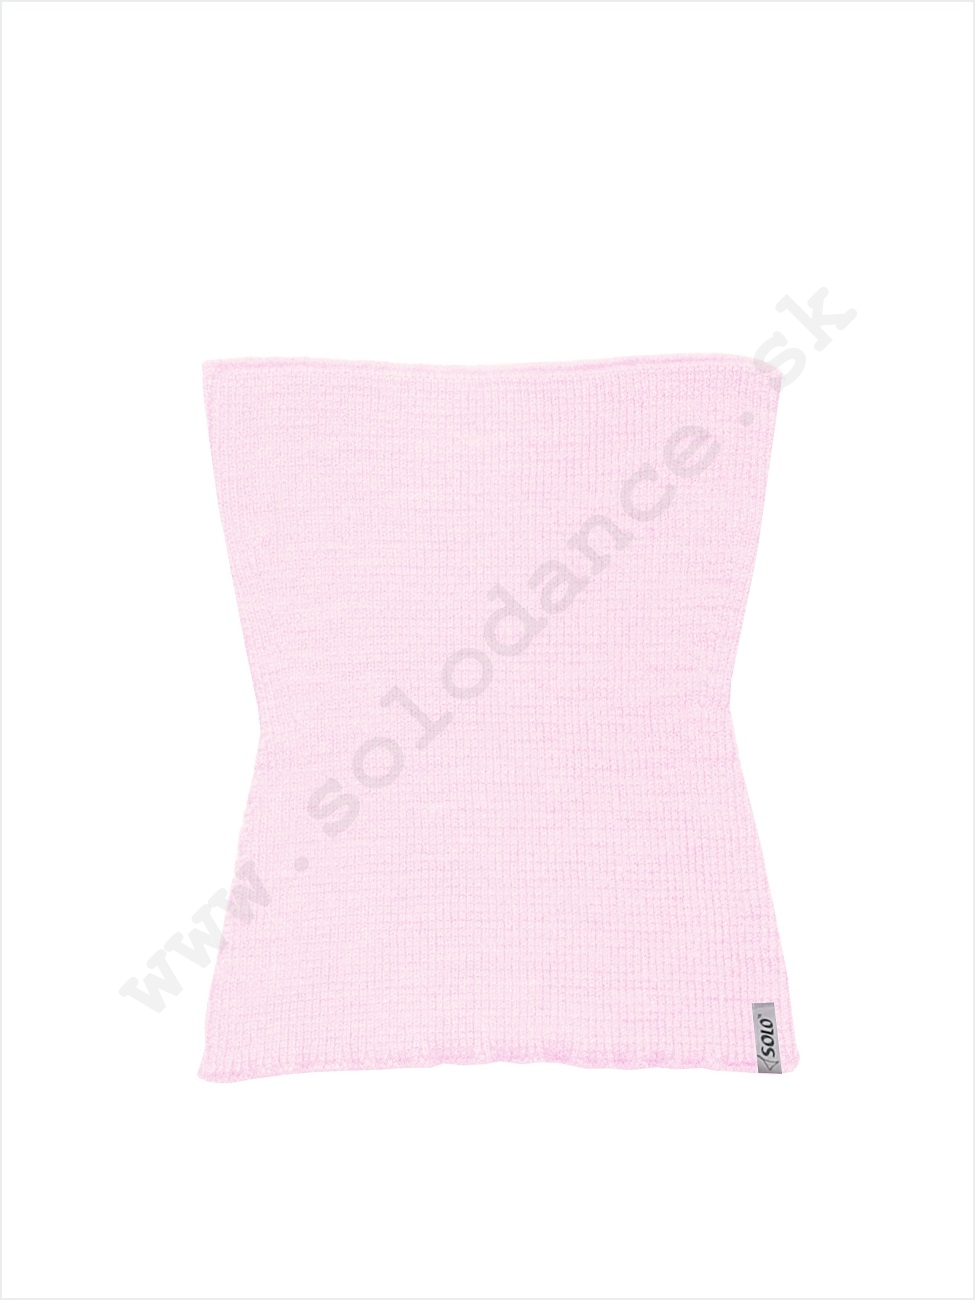 Body warmer for rhythmic gymnastics SOLO PS4 light pink size 116-134